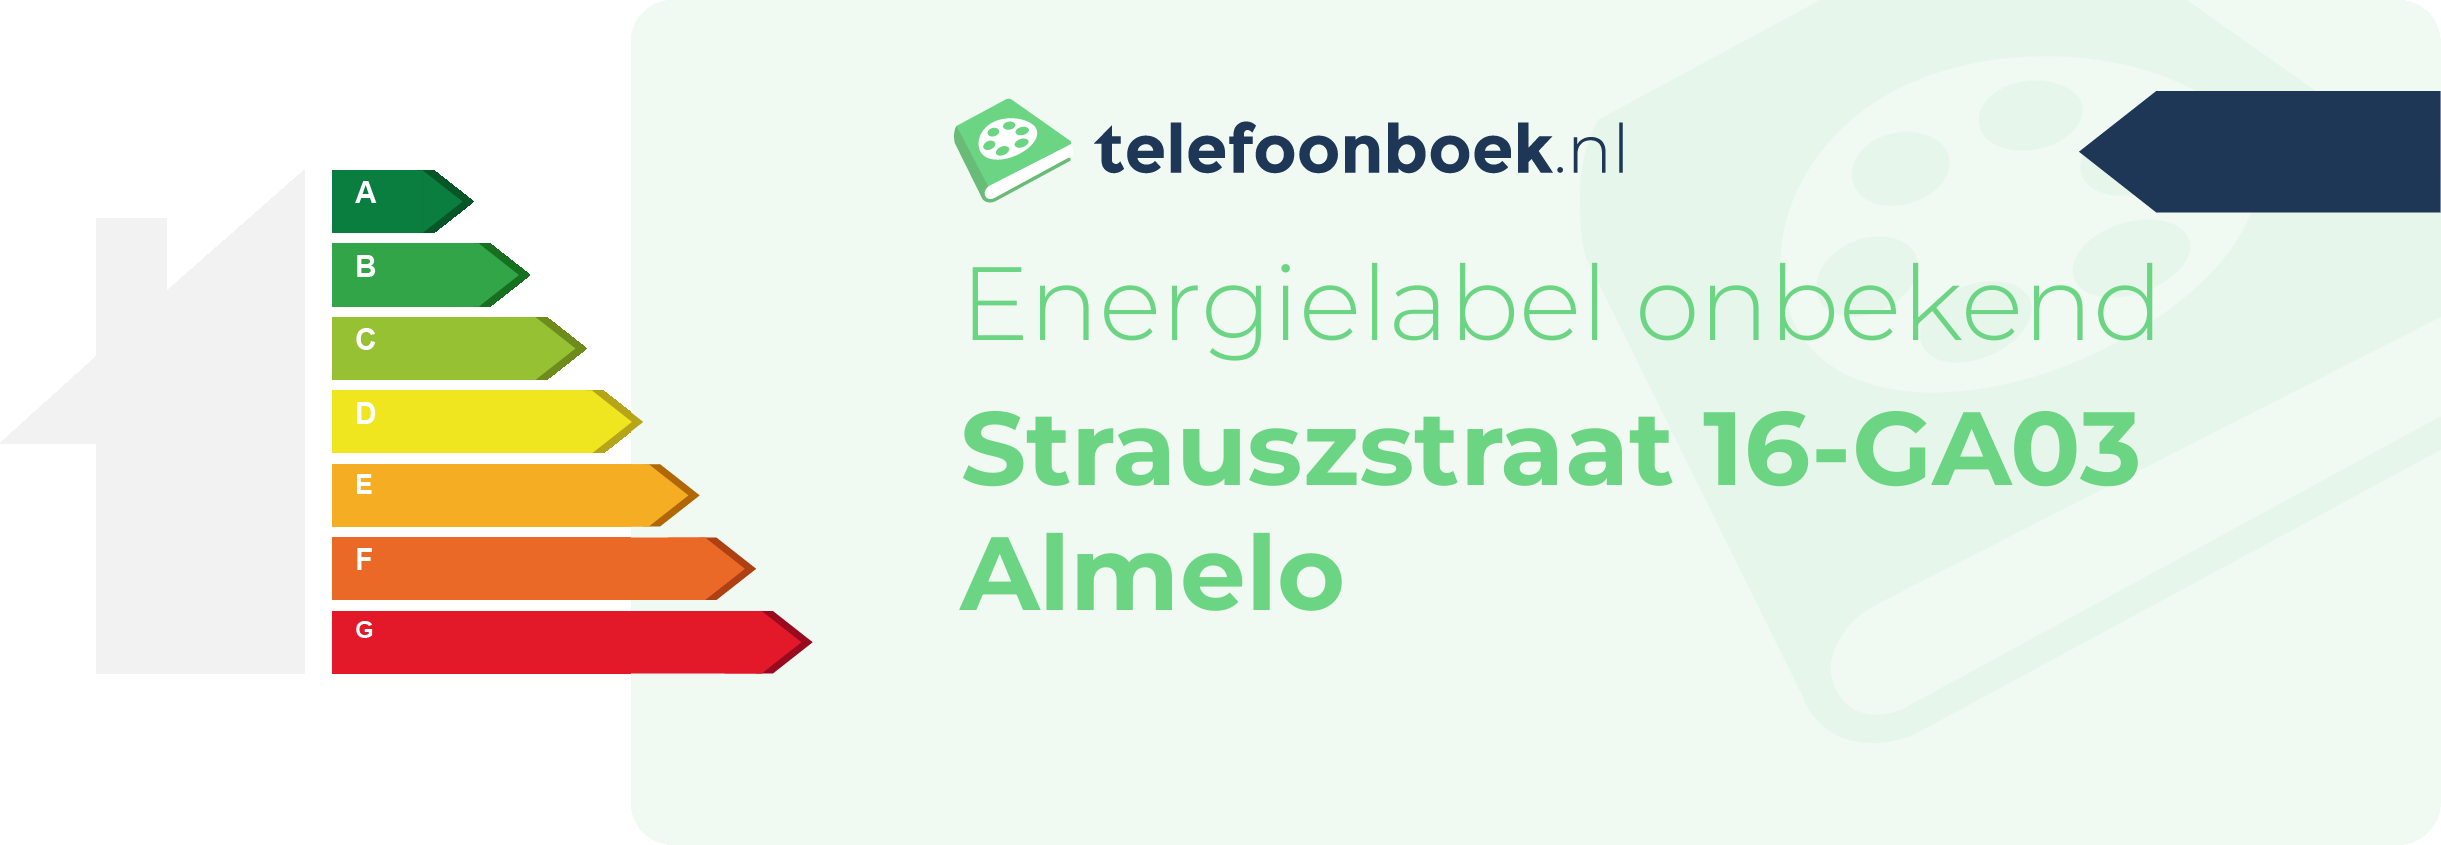 Energielabel Strauszstraat 16-GA03 Almelo